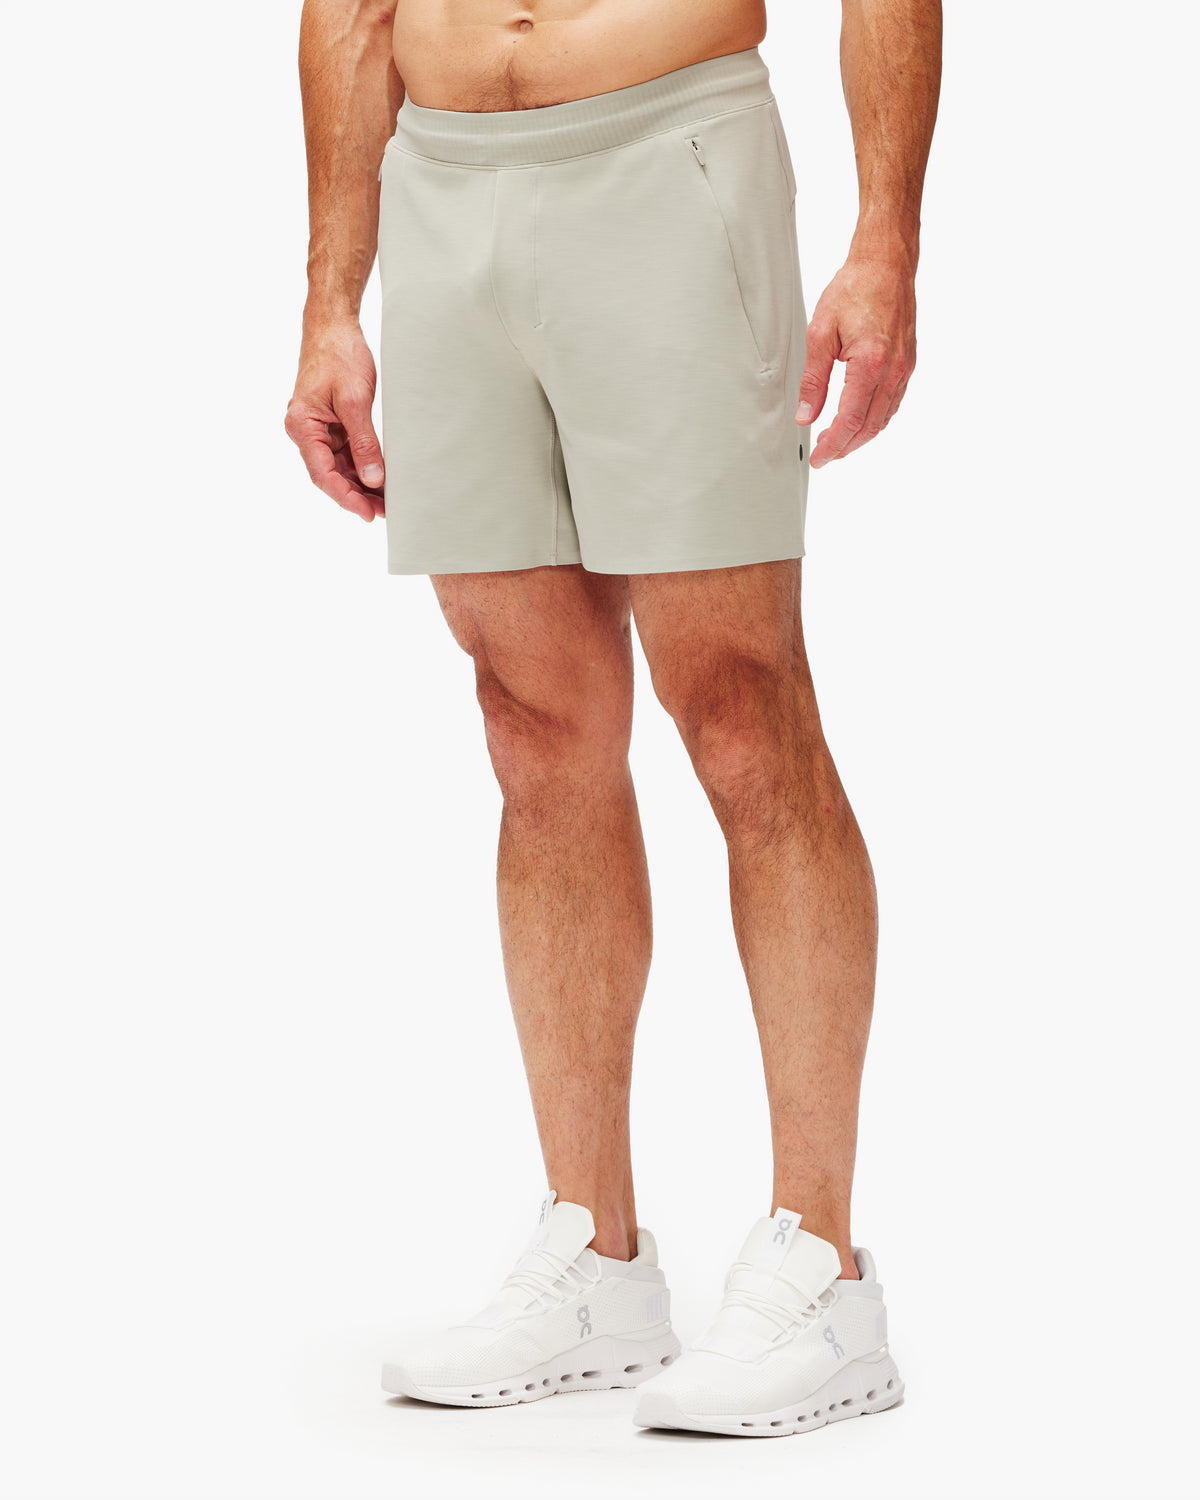 Everlux Yoga Short 6, Men's Shorts